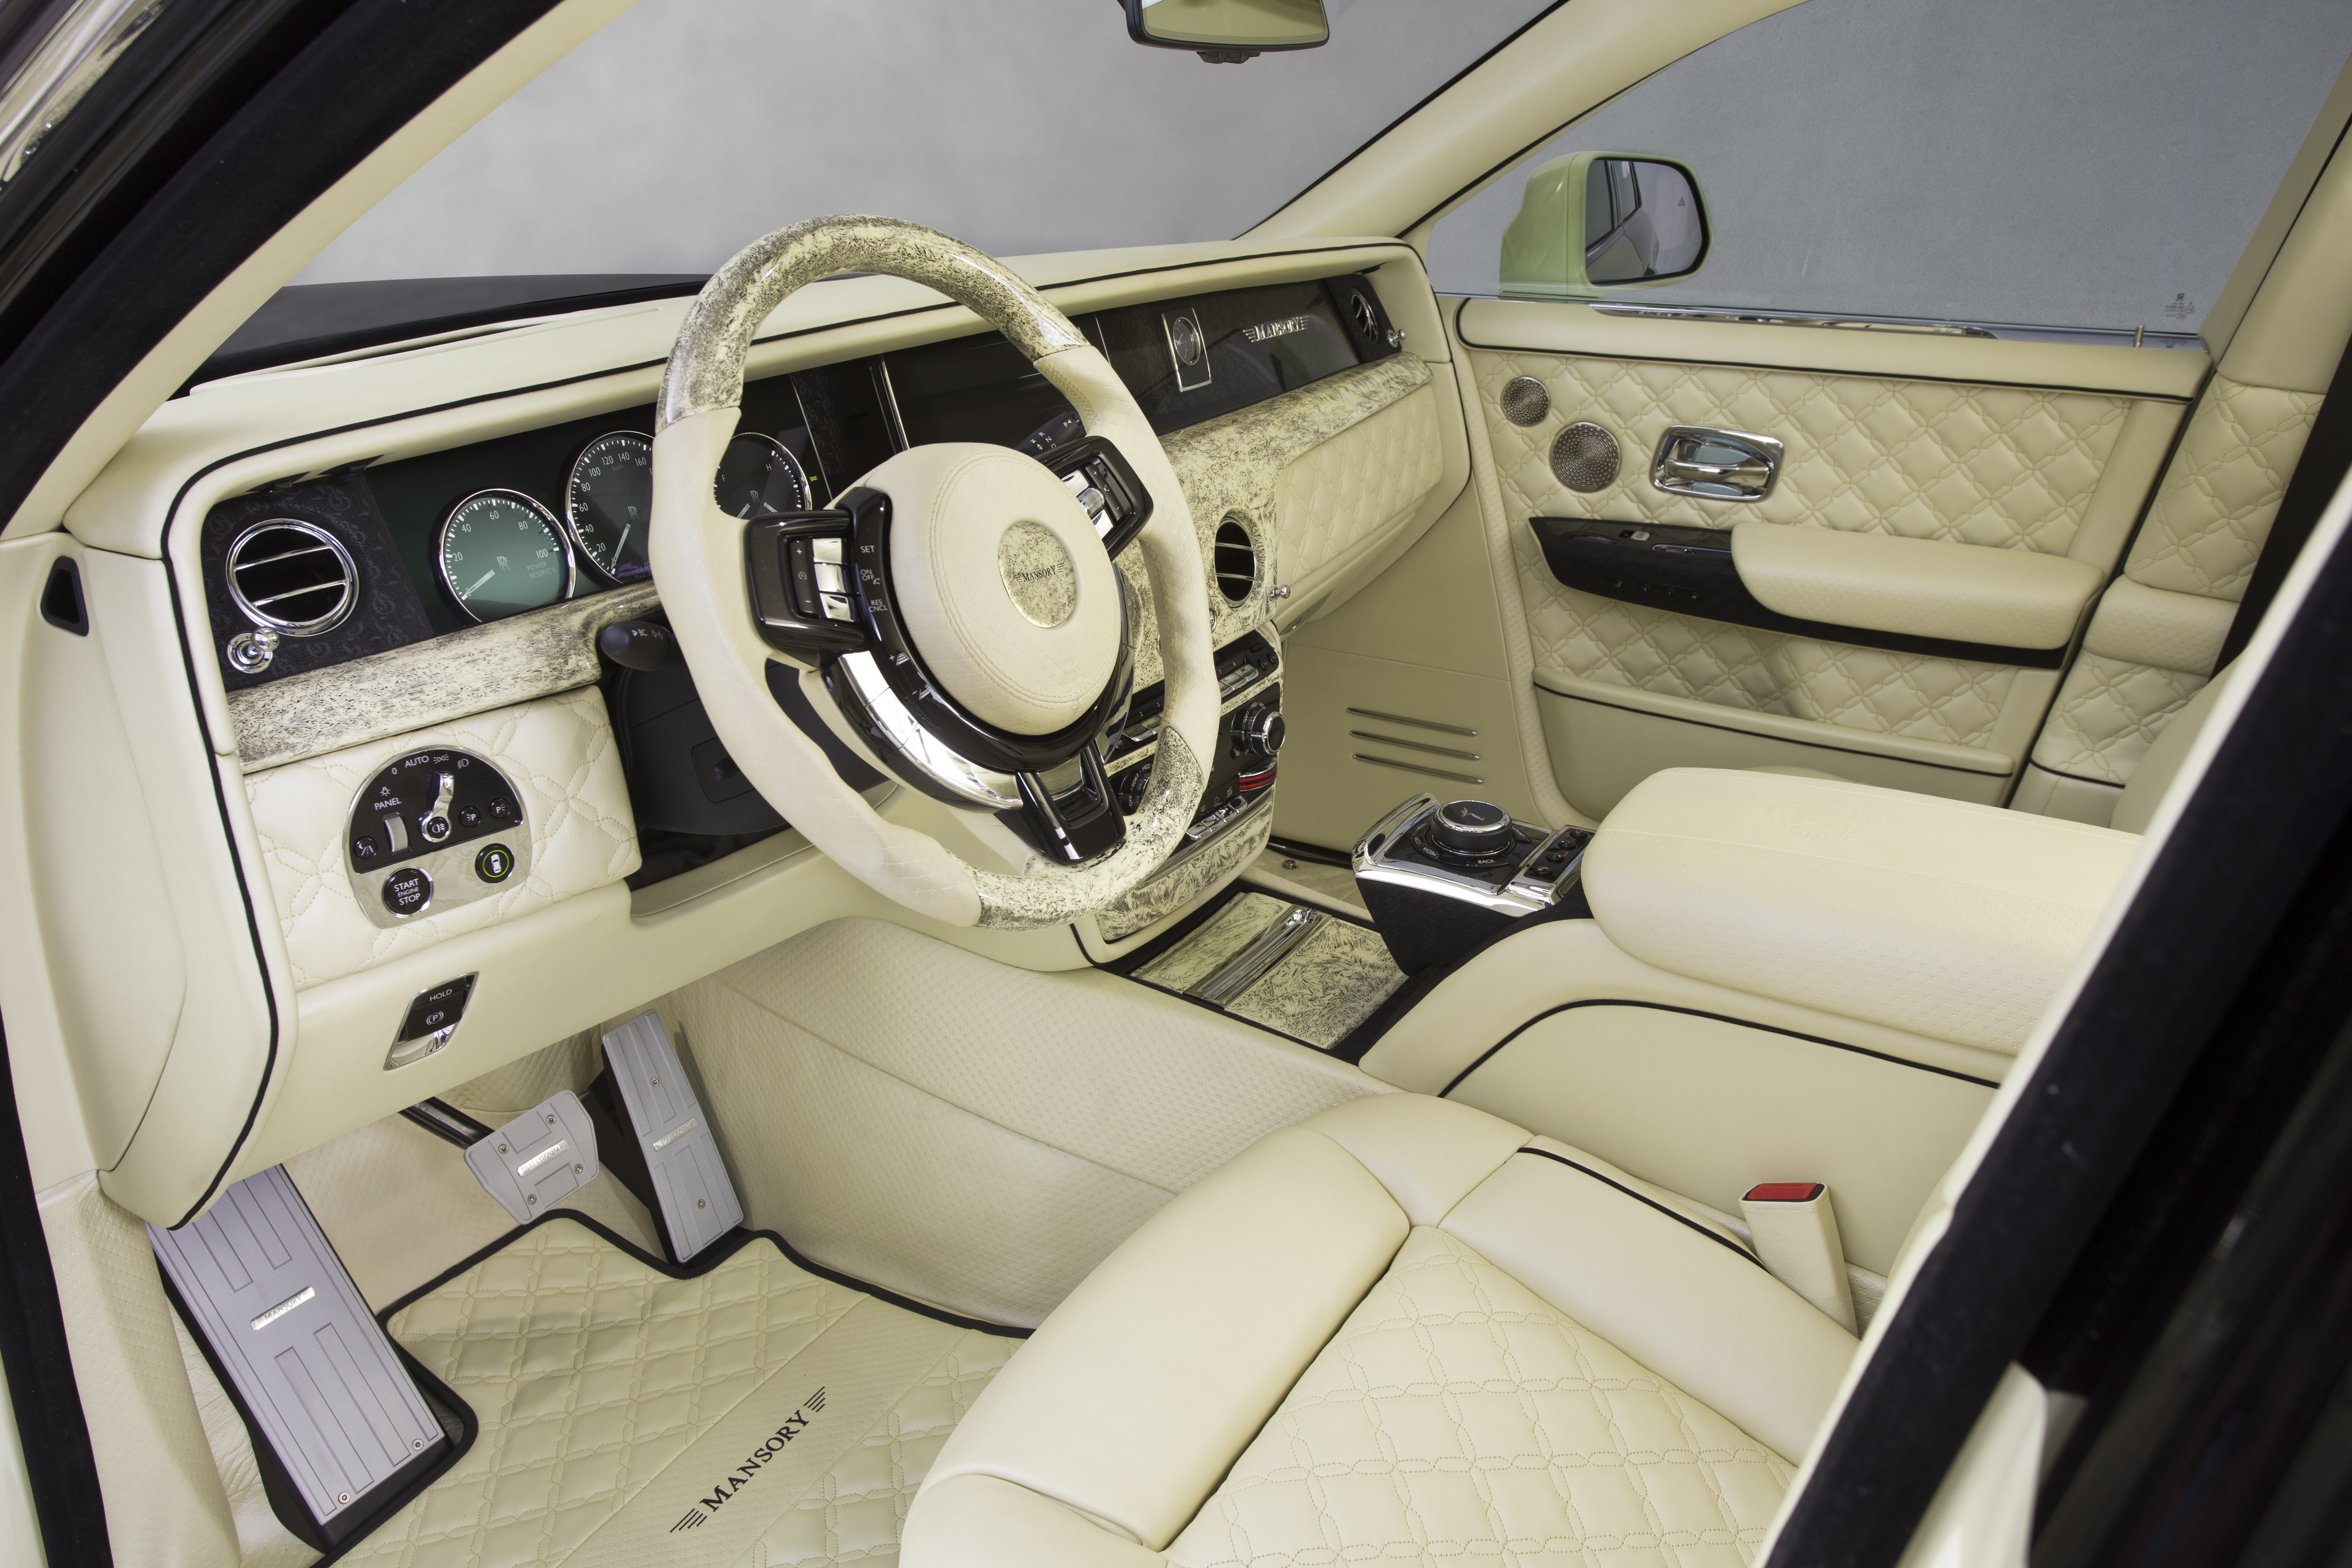 RollsRoyce Phantom exterior and interior images  Autocar India